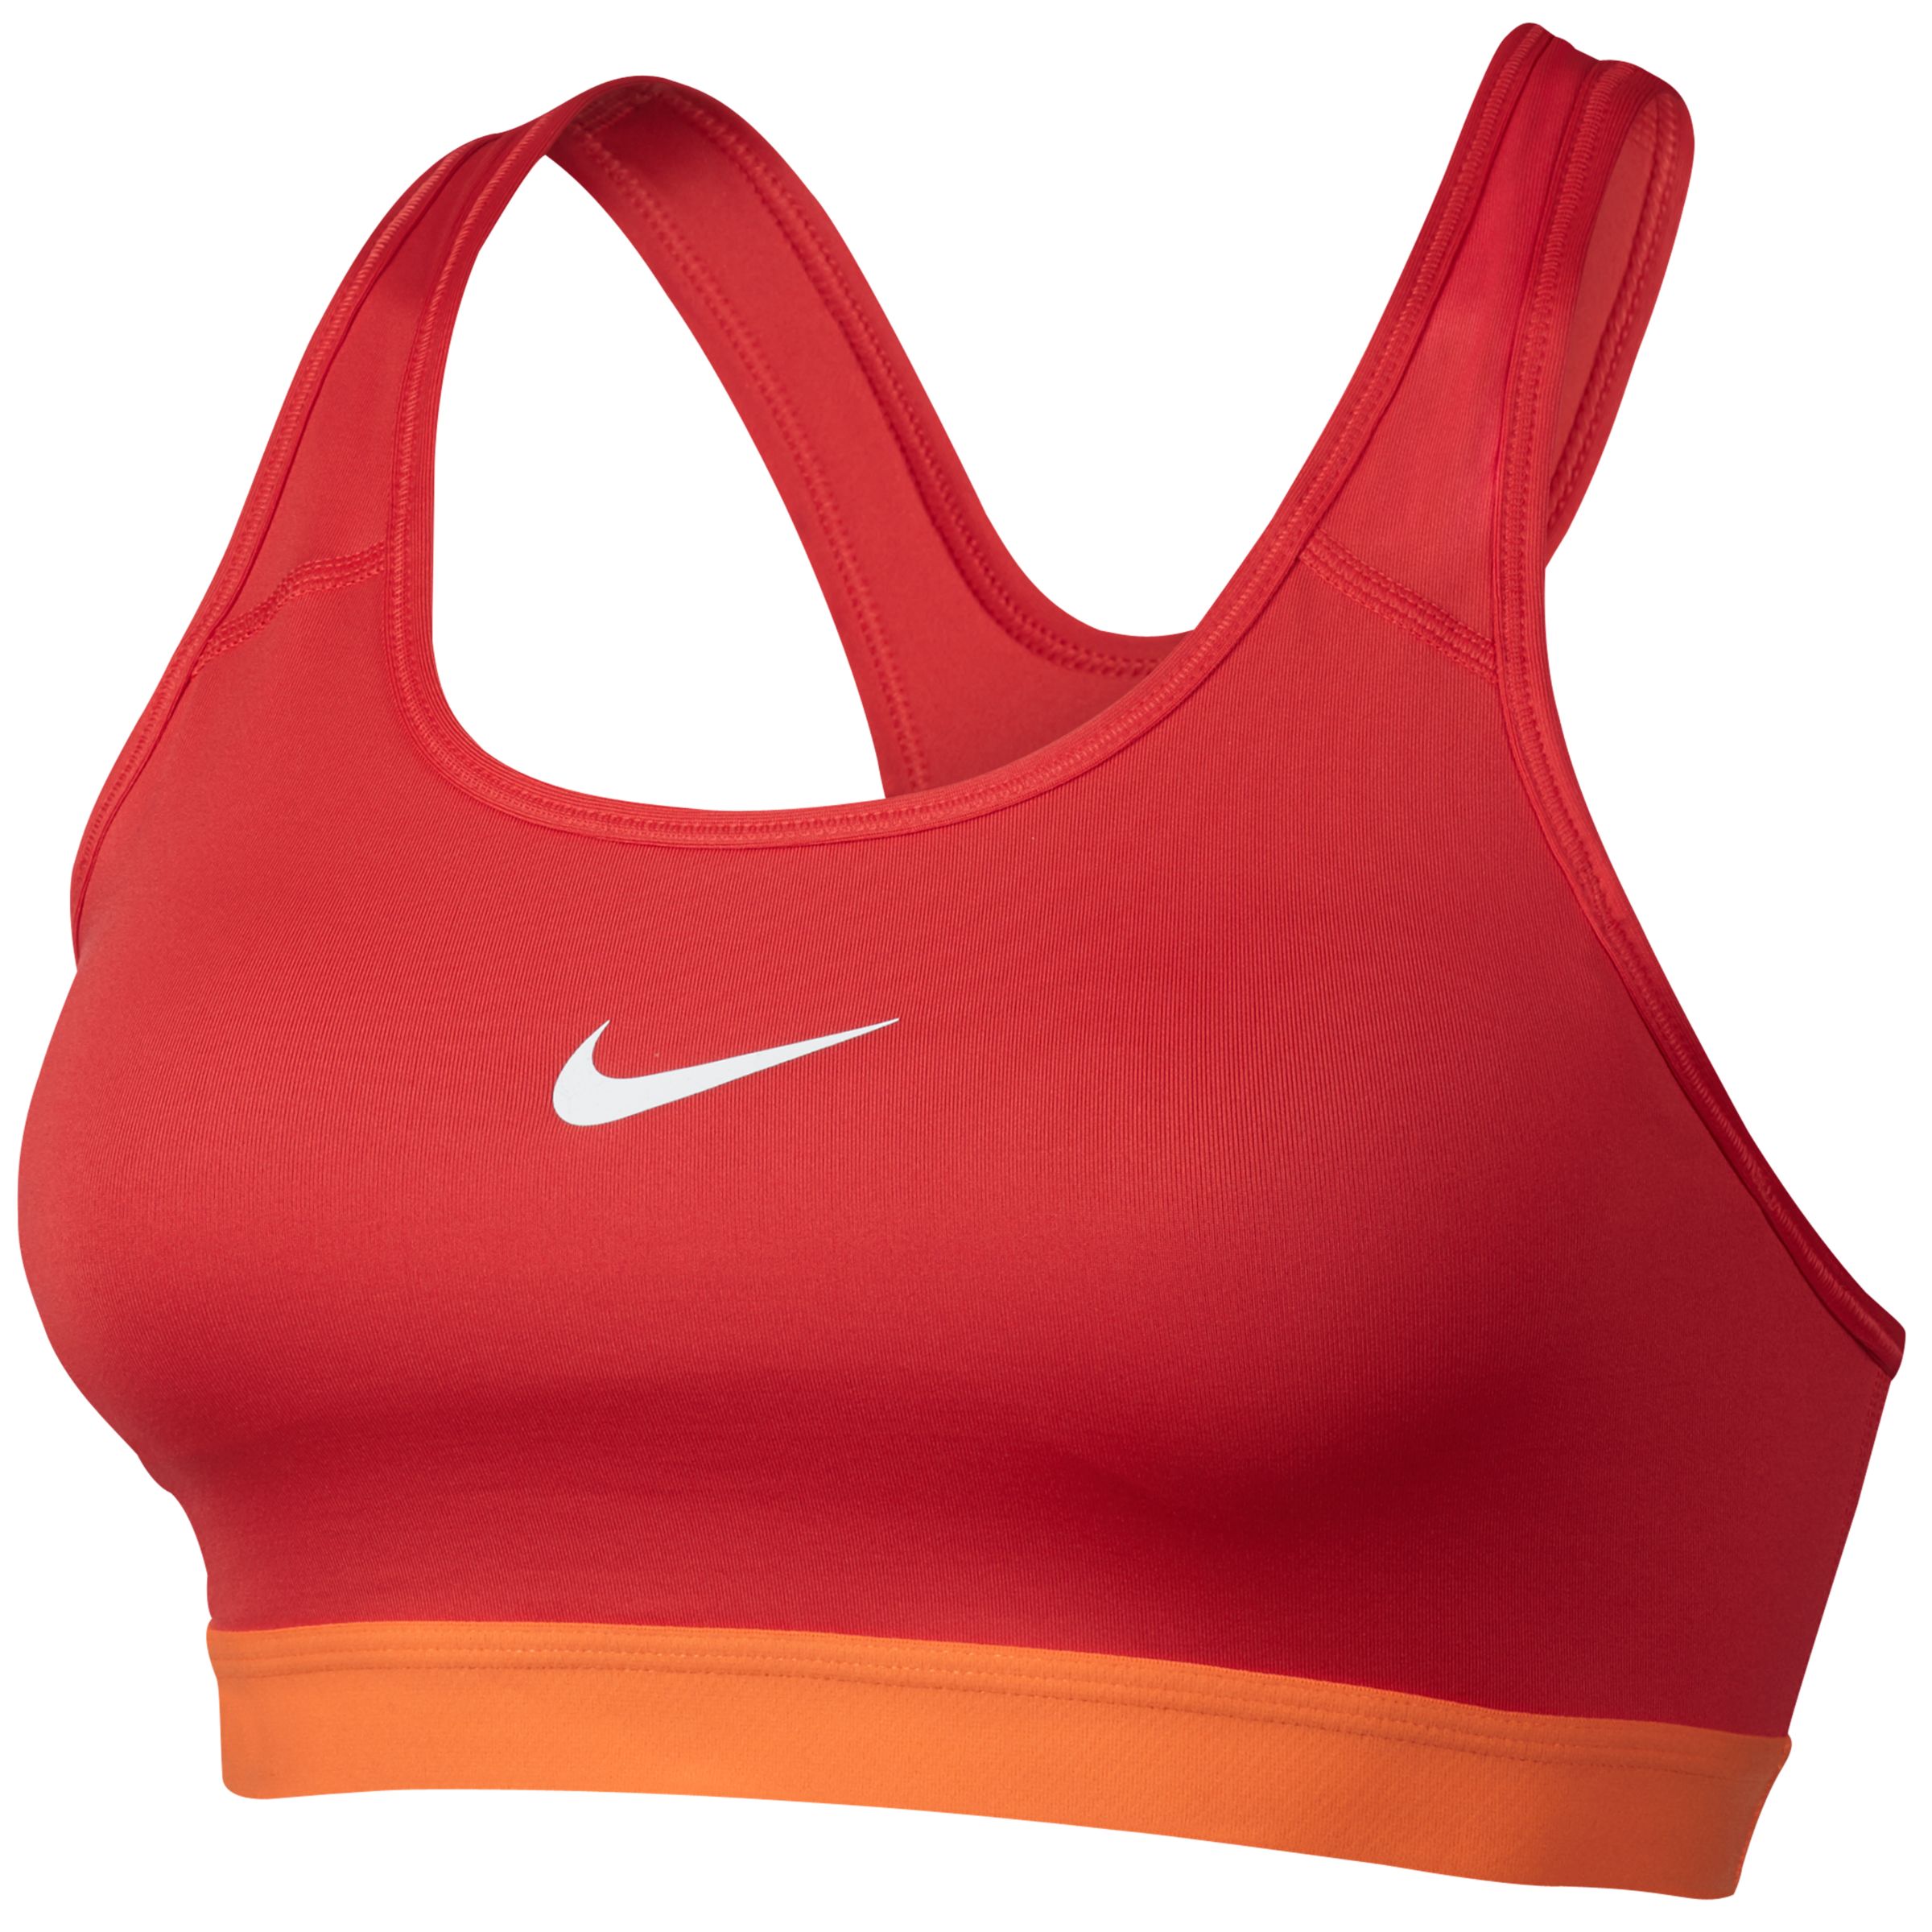 Nike Pro Classic Padded Sports Bra, Red/Orange